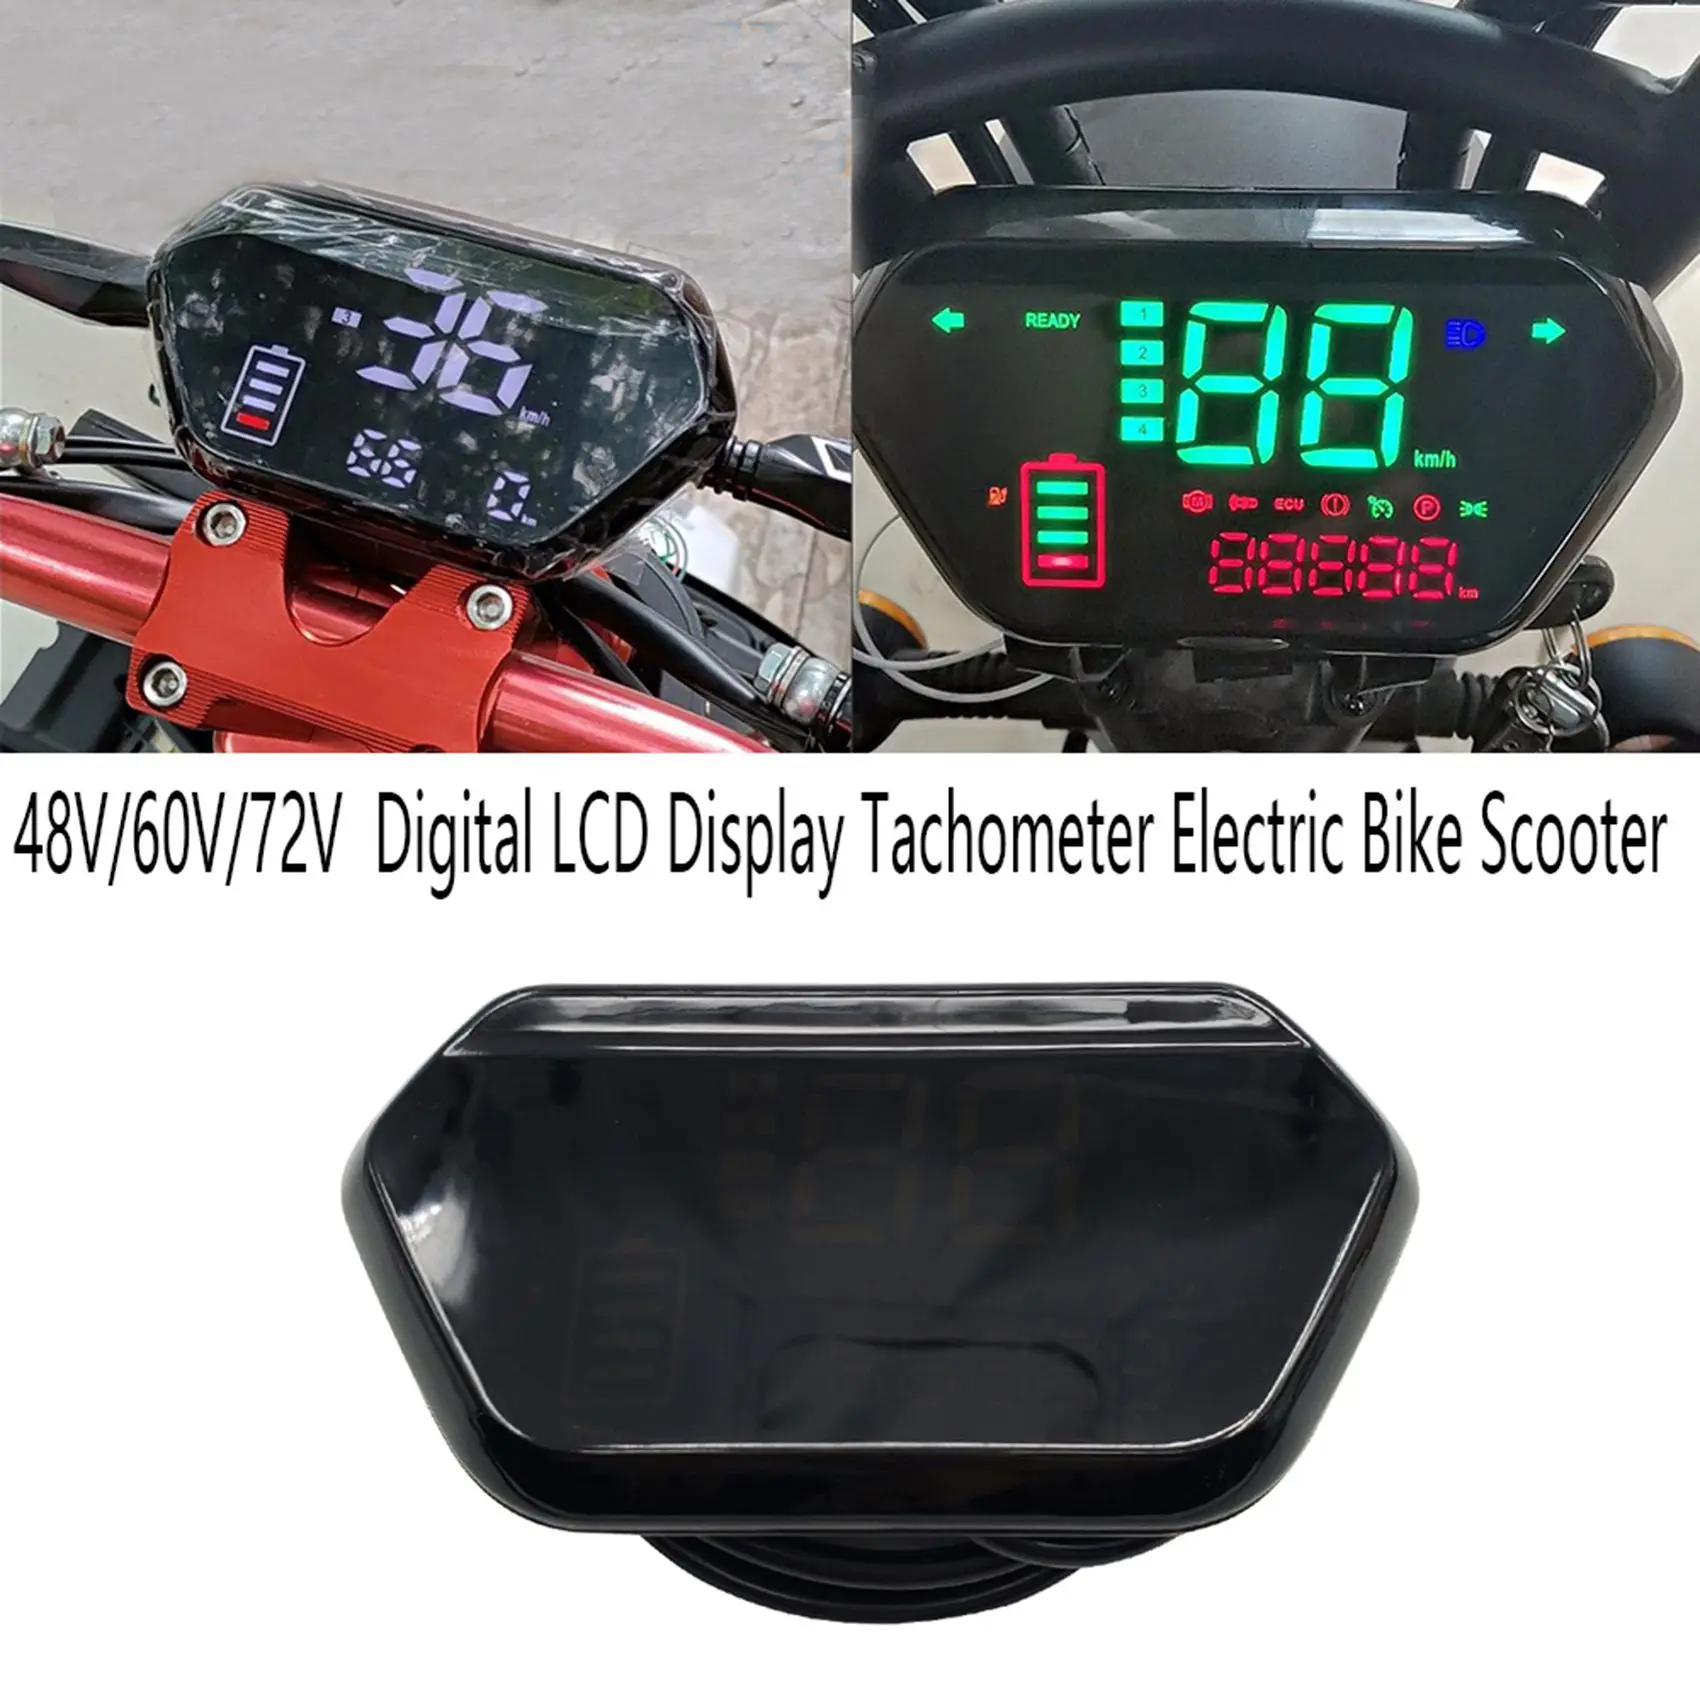 

48V/60V/72V Motorcycle Odometer Digital LCD Display Tachometer LCD Speedometer for Electric Bike Scooter